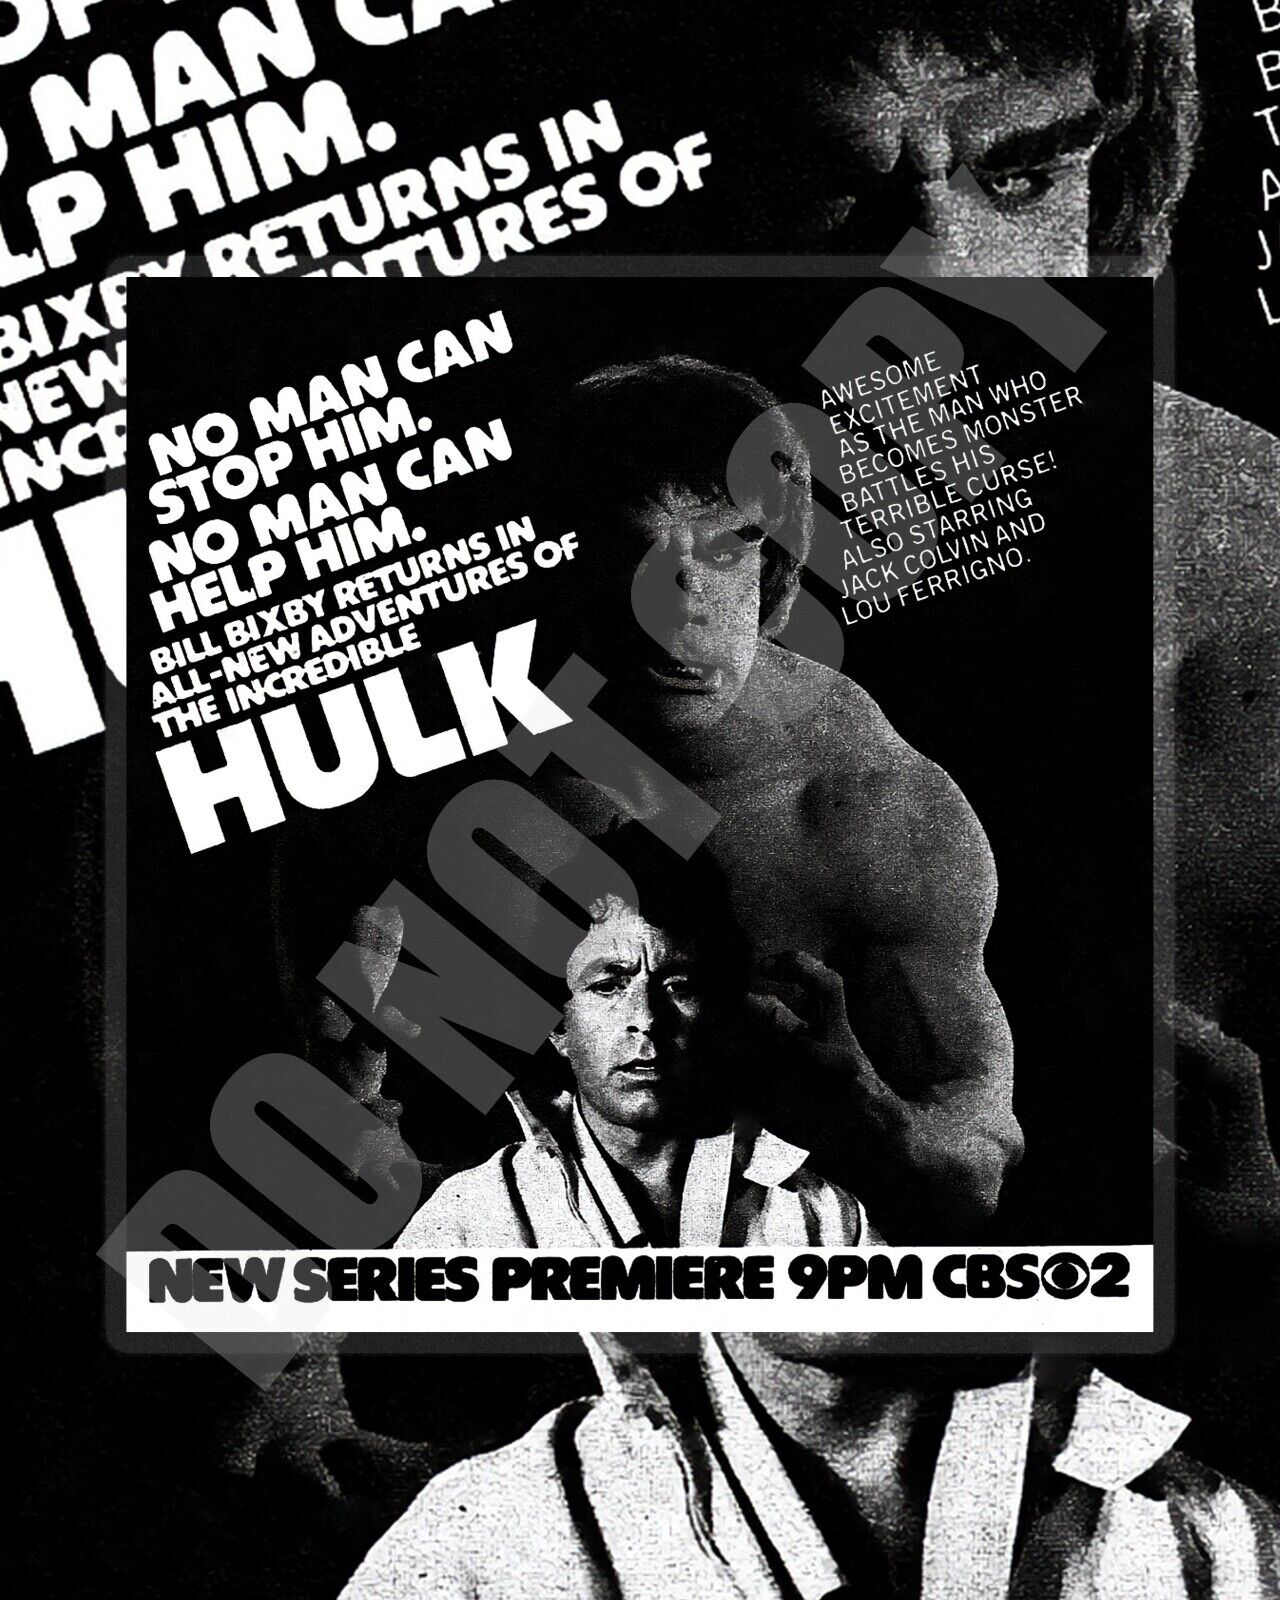 1978 The Hulk TV Show Series Premiere Magazine Guide Promo Ad Art 8x10 Photo